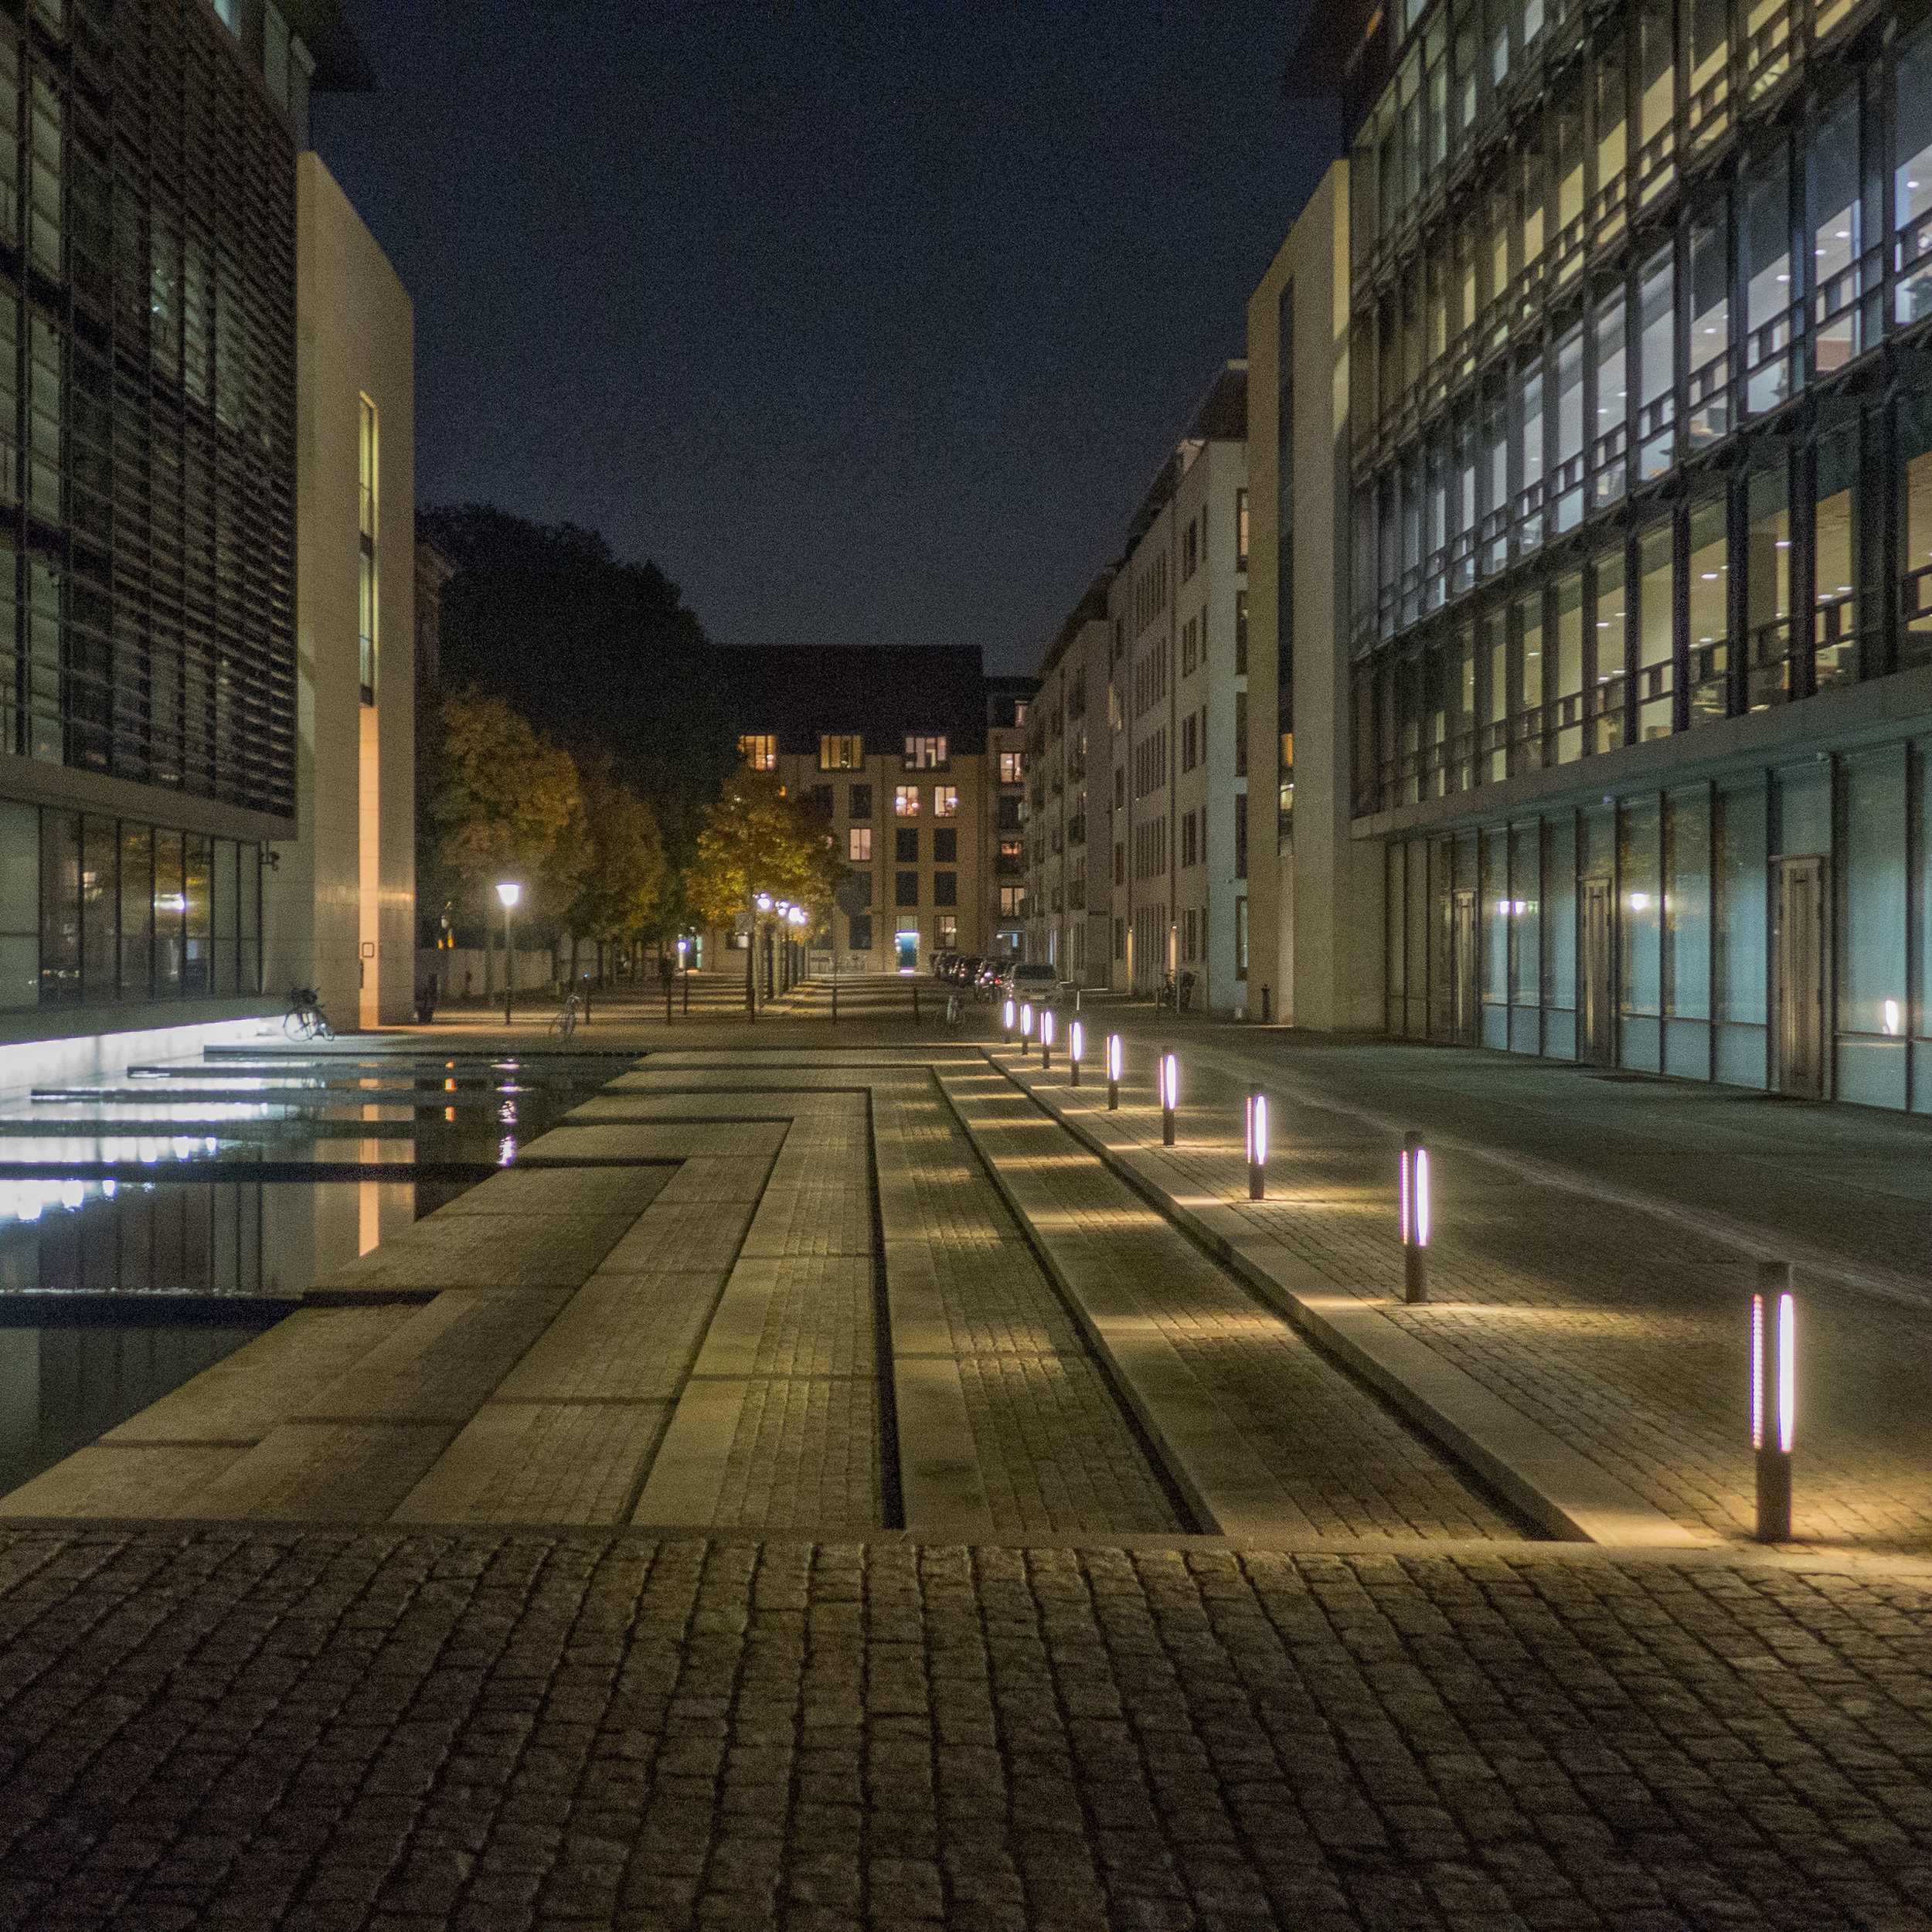 street lighting Copenhagen — danish architecture and design review